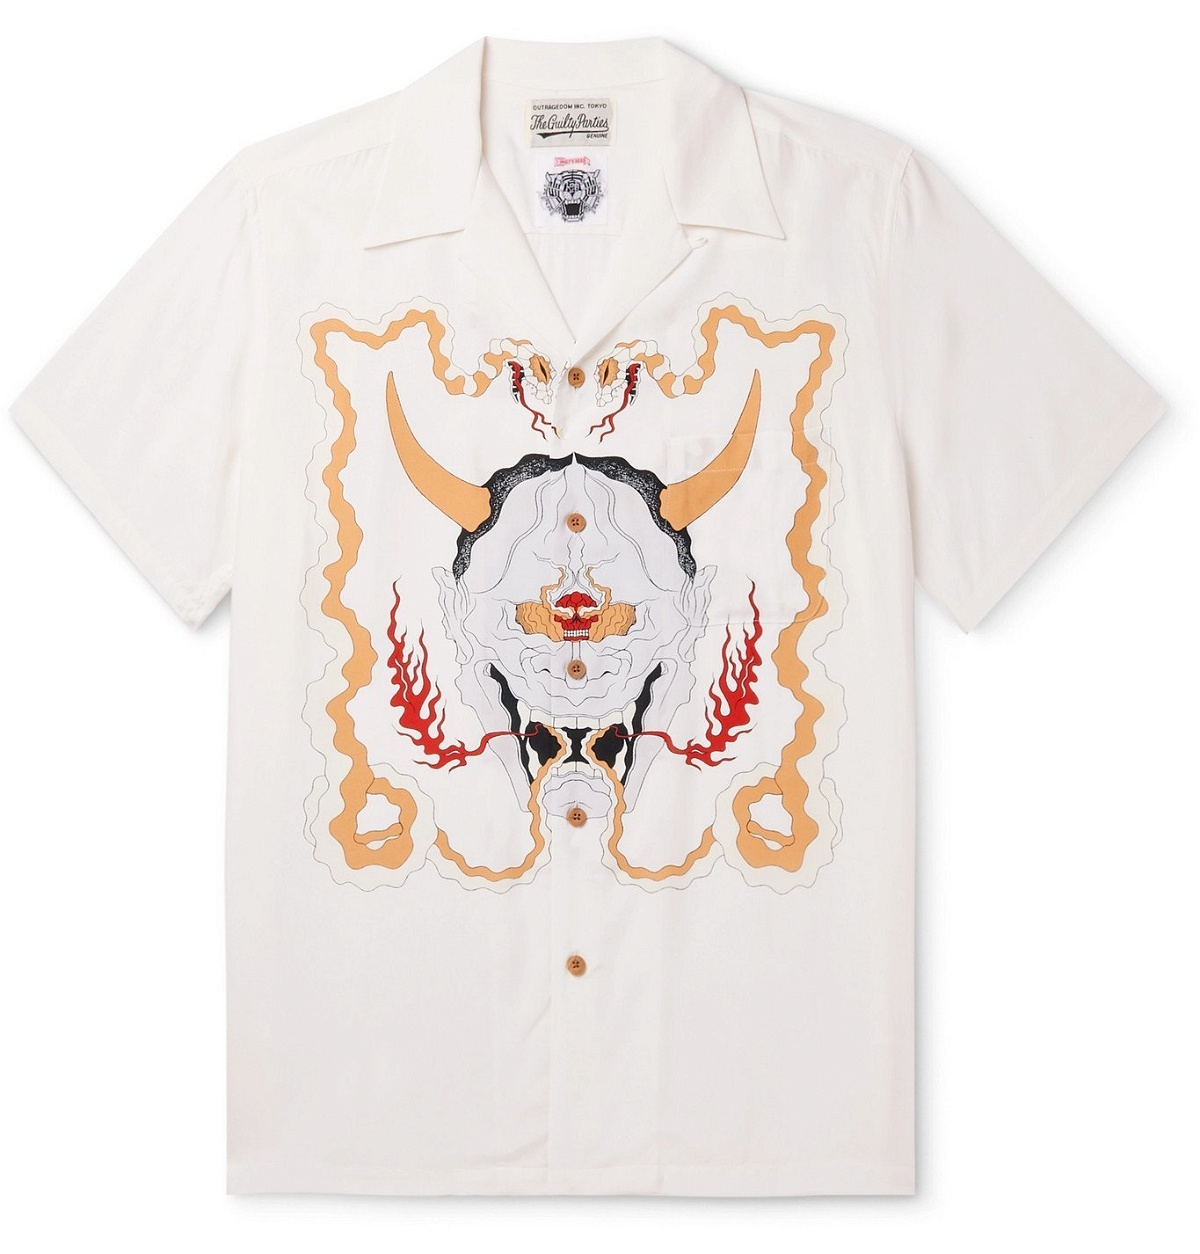 Wacko Maria - Wolf's Head Camp-Collar Printed Woven Shirt - White